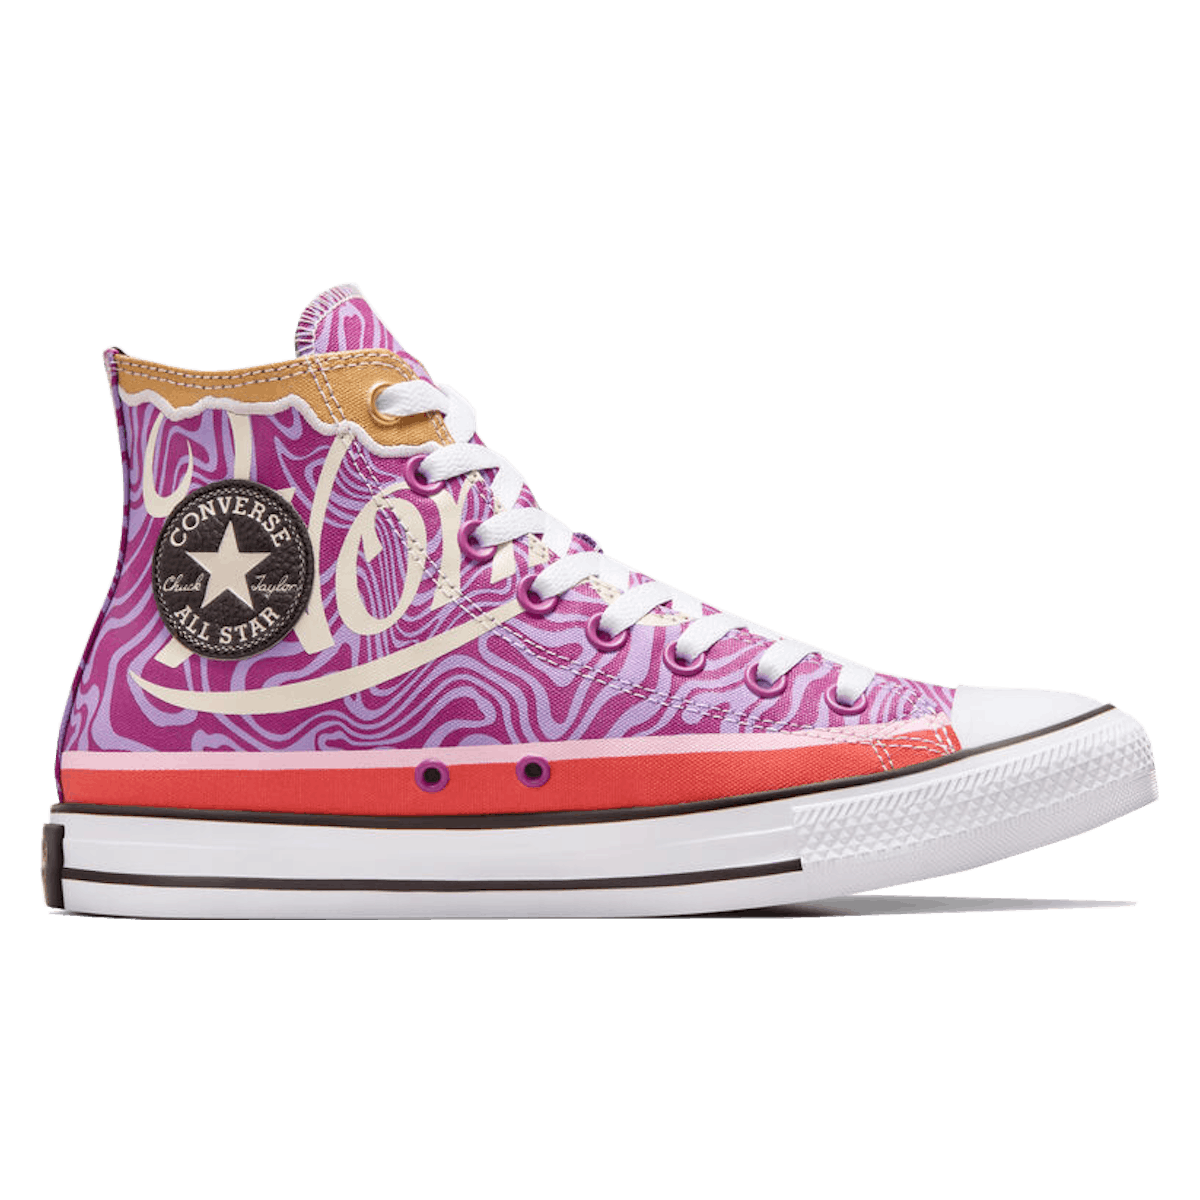 Wonka x Converse Chuck Taylor All Star "Swirl"